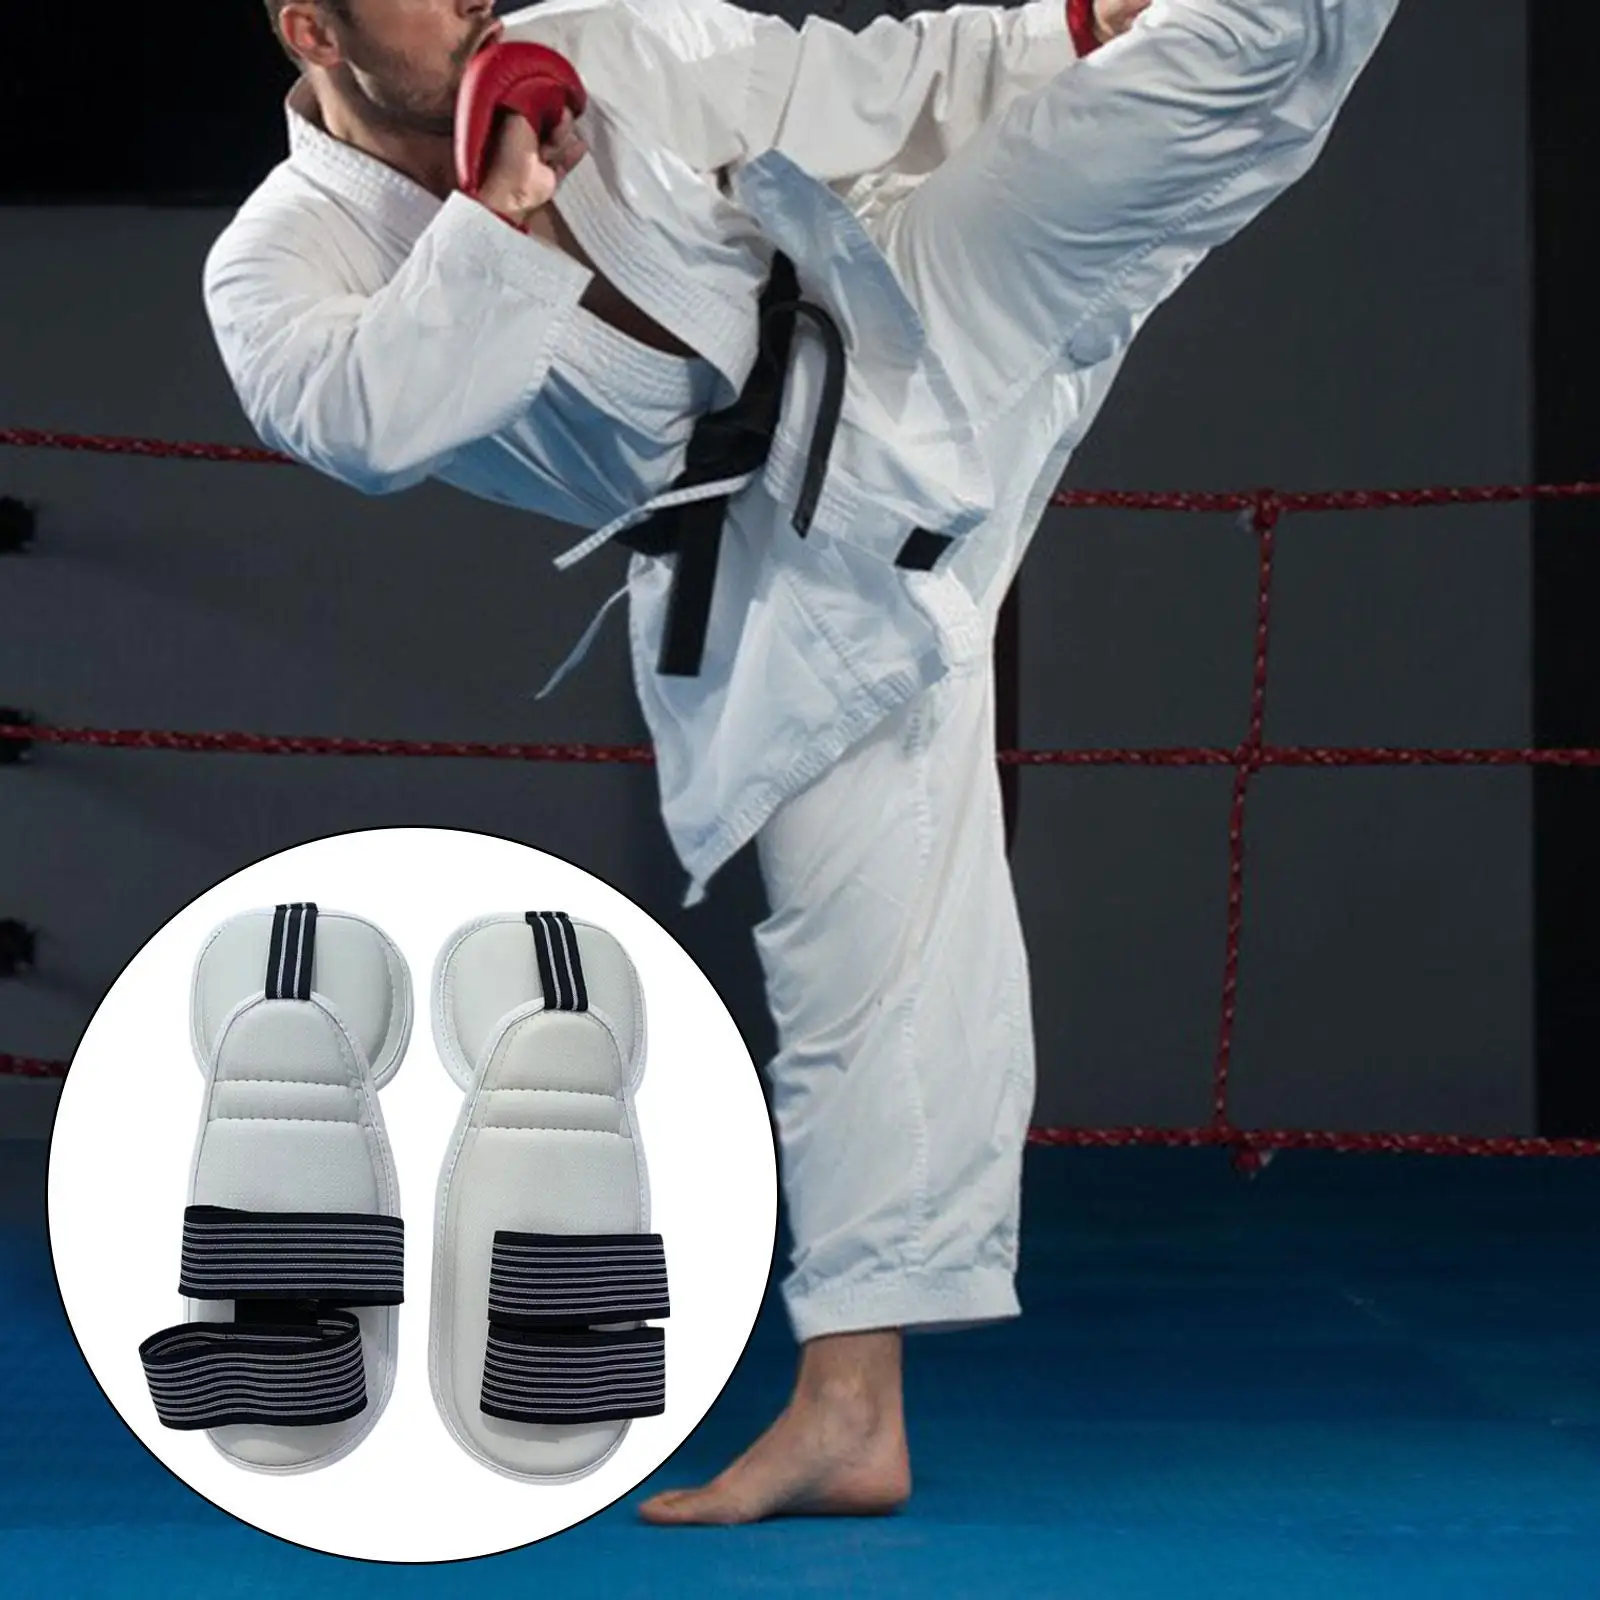 Taekwondo Forearm Guards Protectors Adults Kids Boxing Match Protective Gear